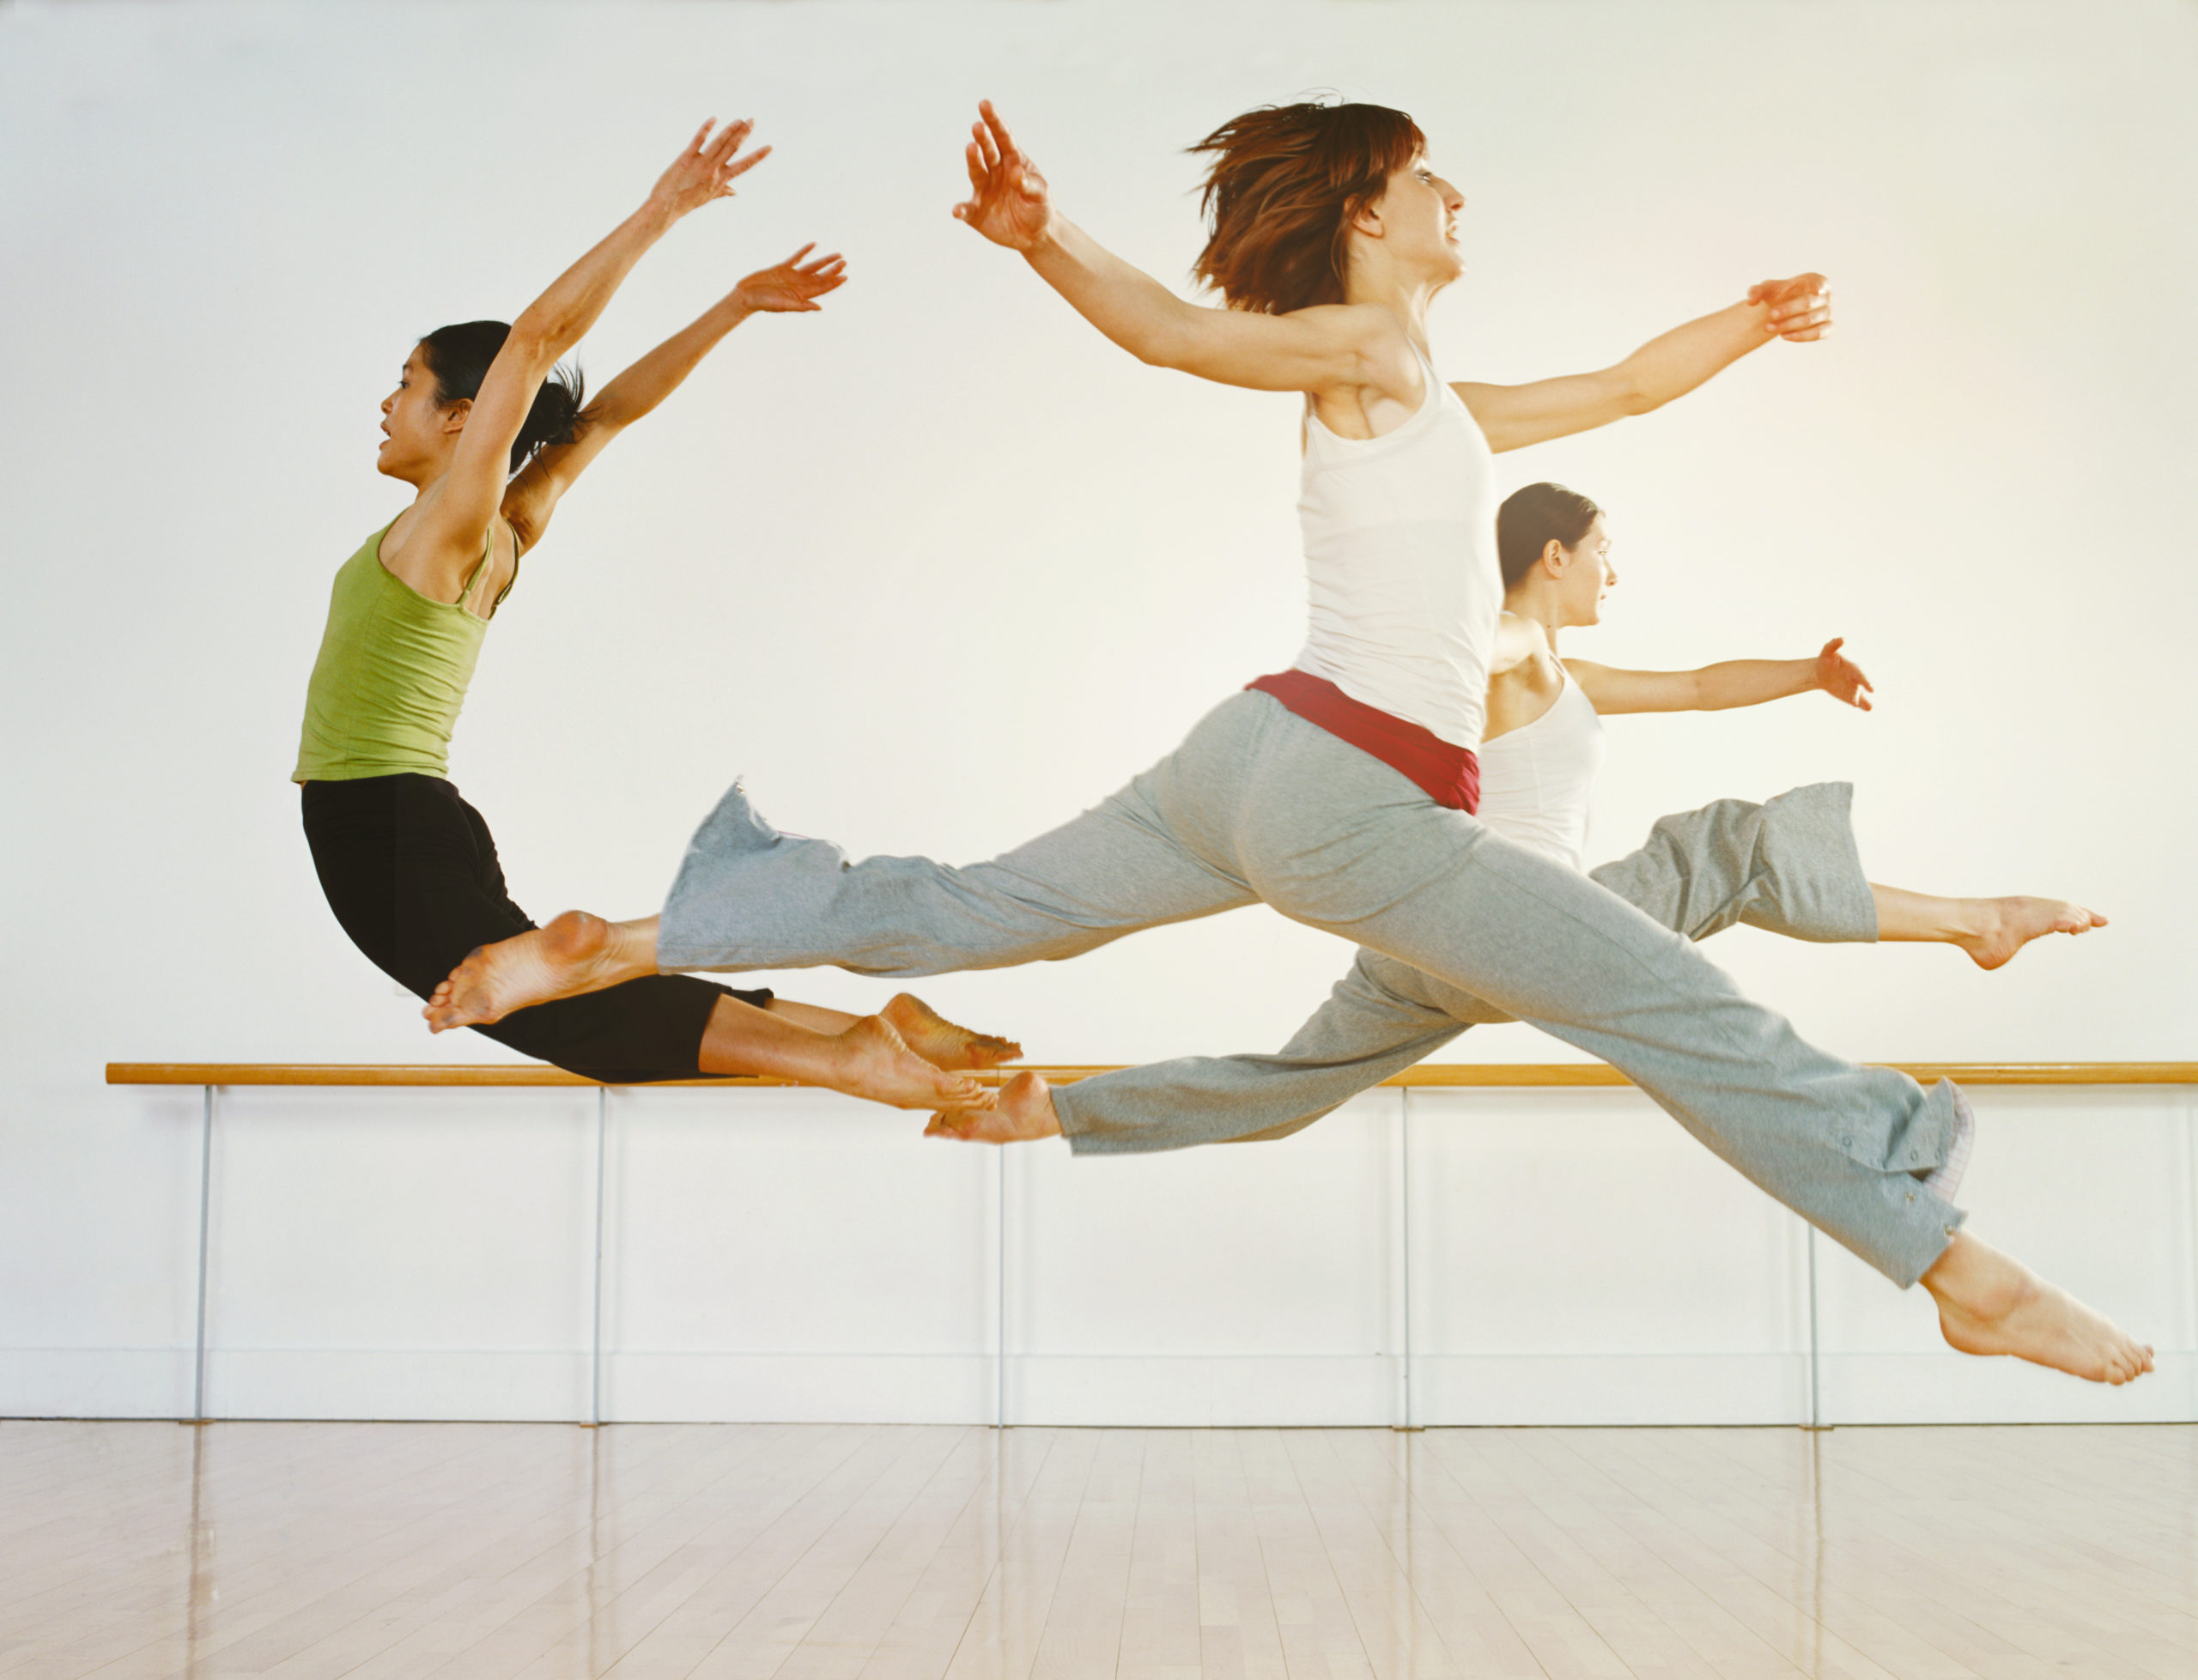 dancers jumping in a studio